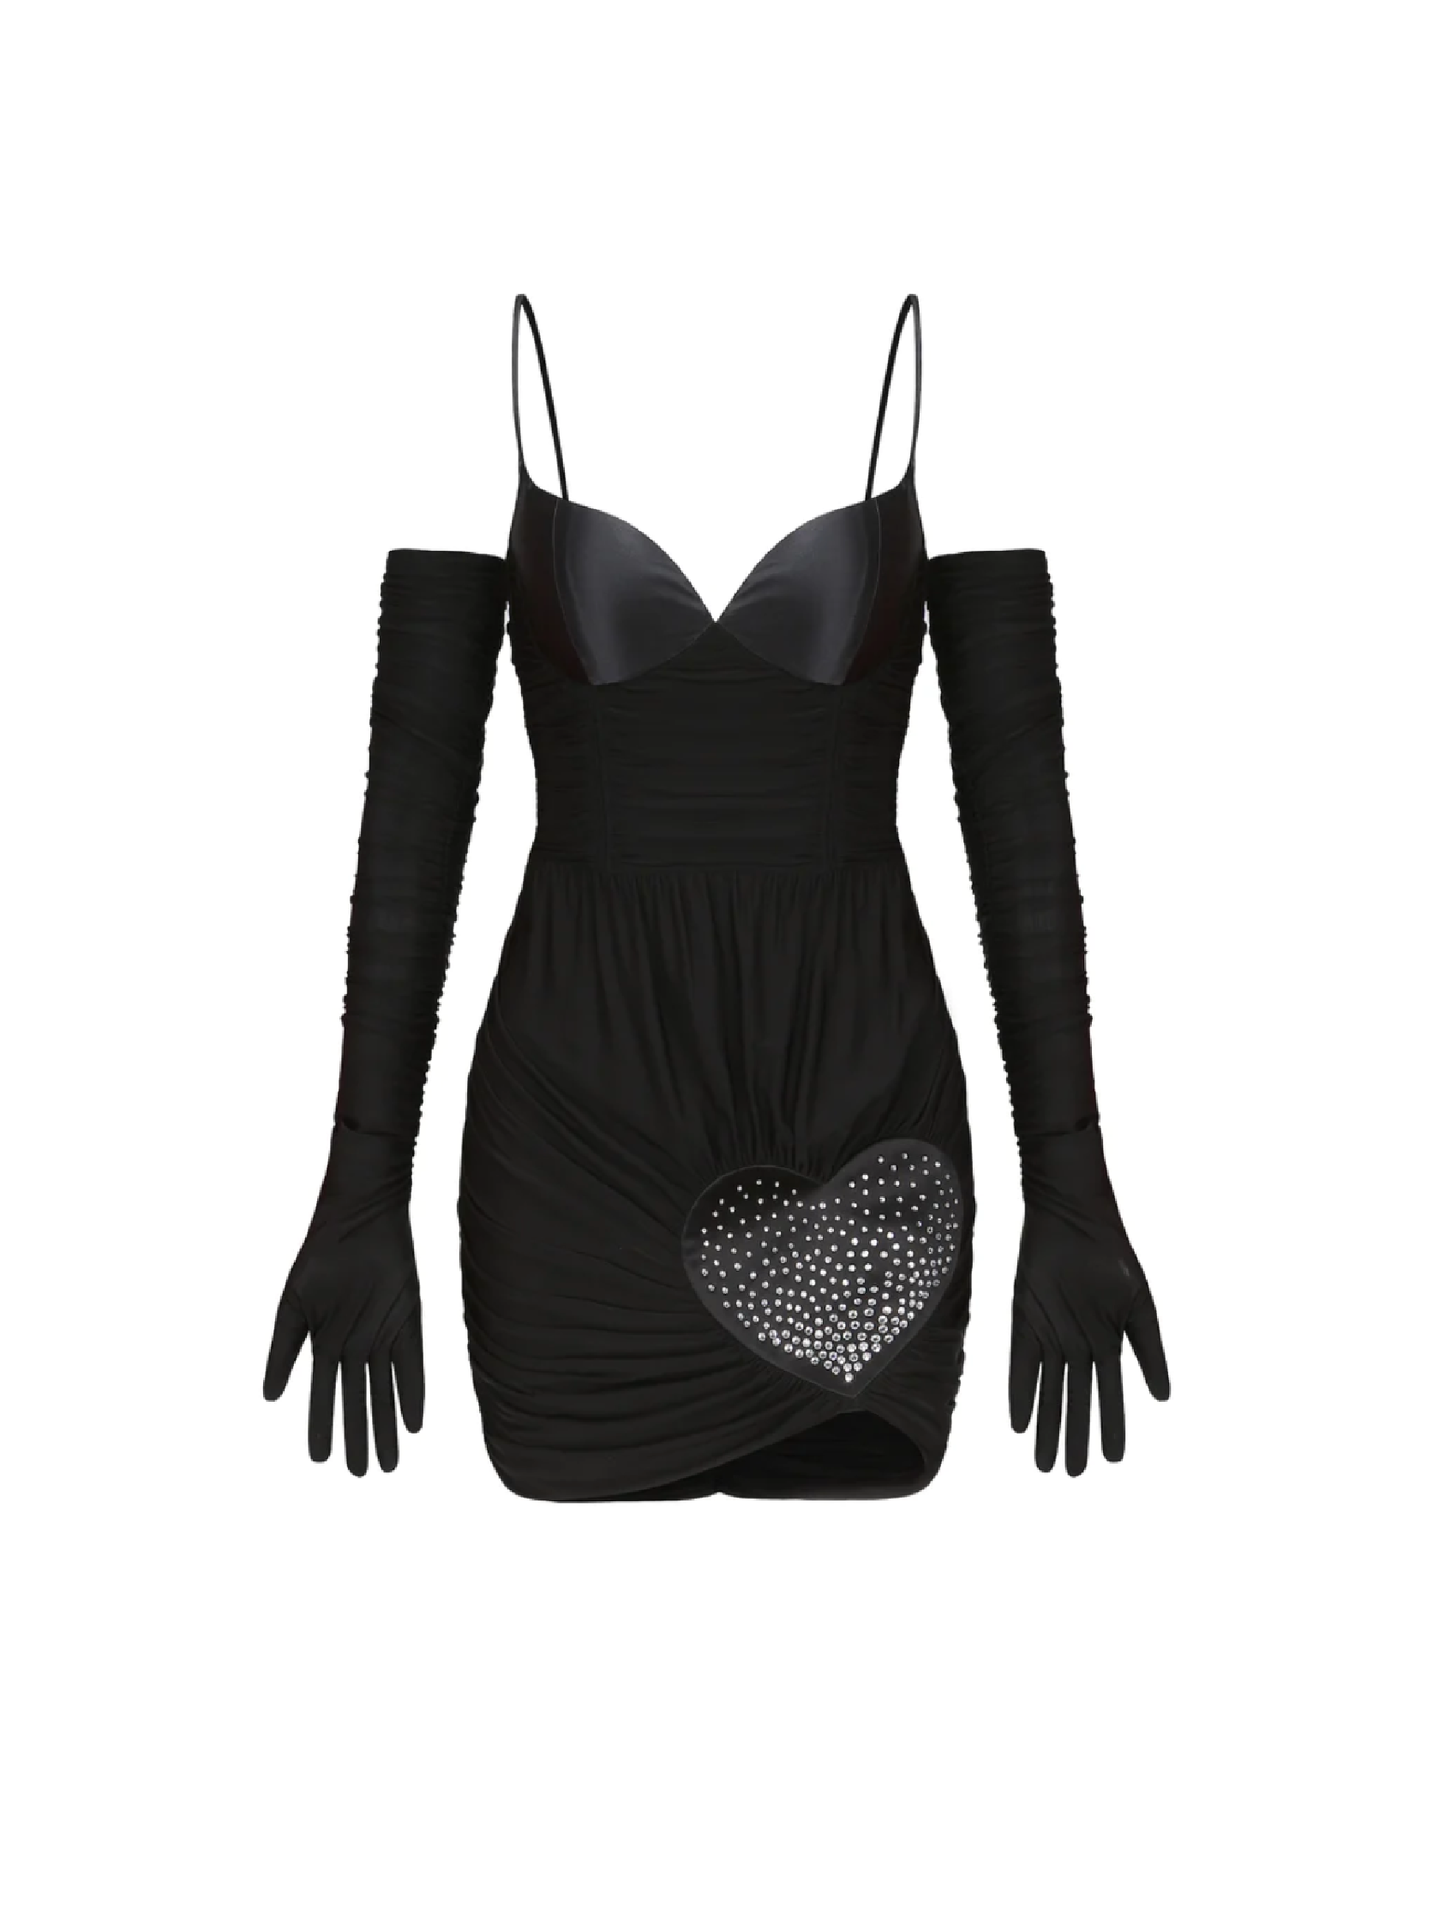 Angelina Silk Dress (Black) (Final Sale)